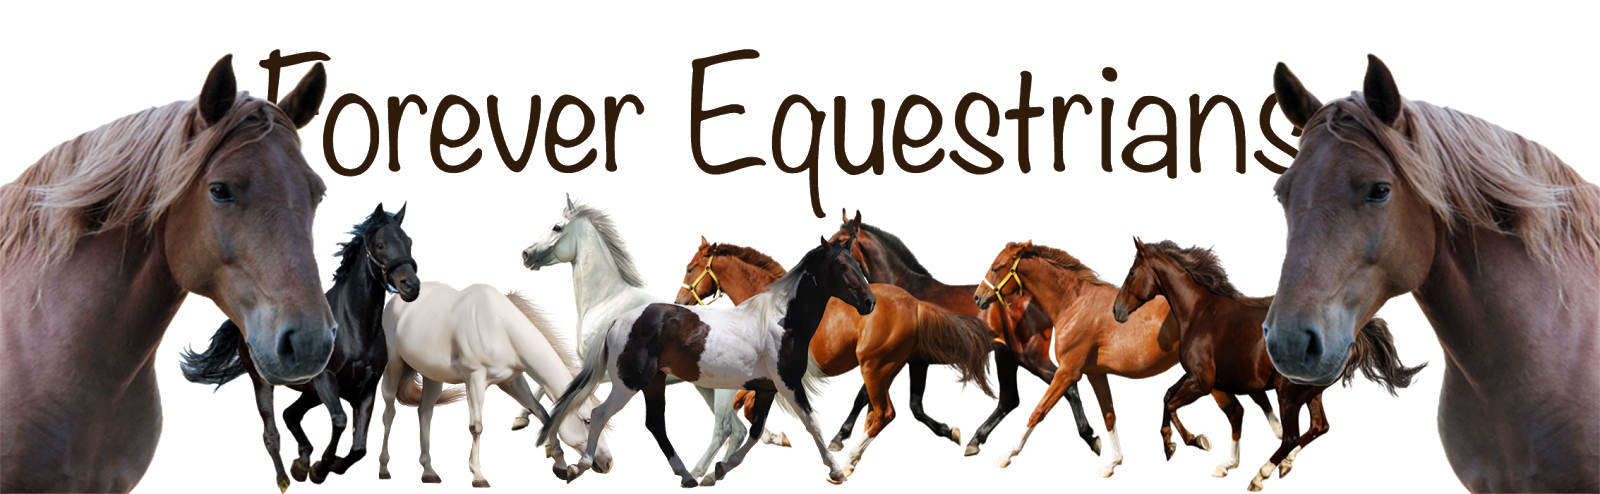 Forever Equestrians